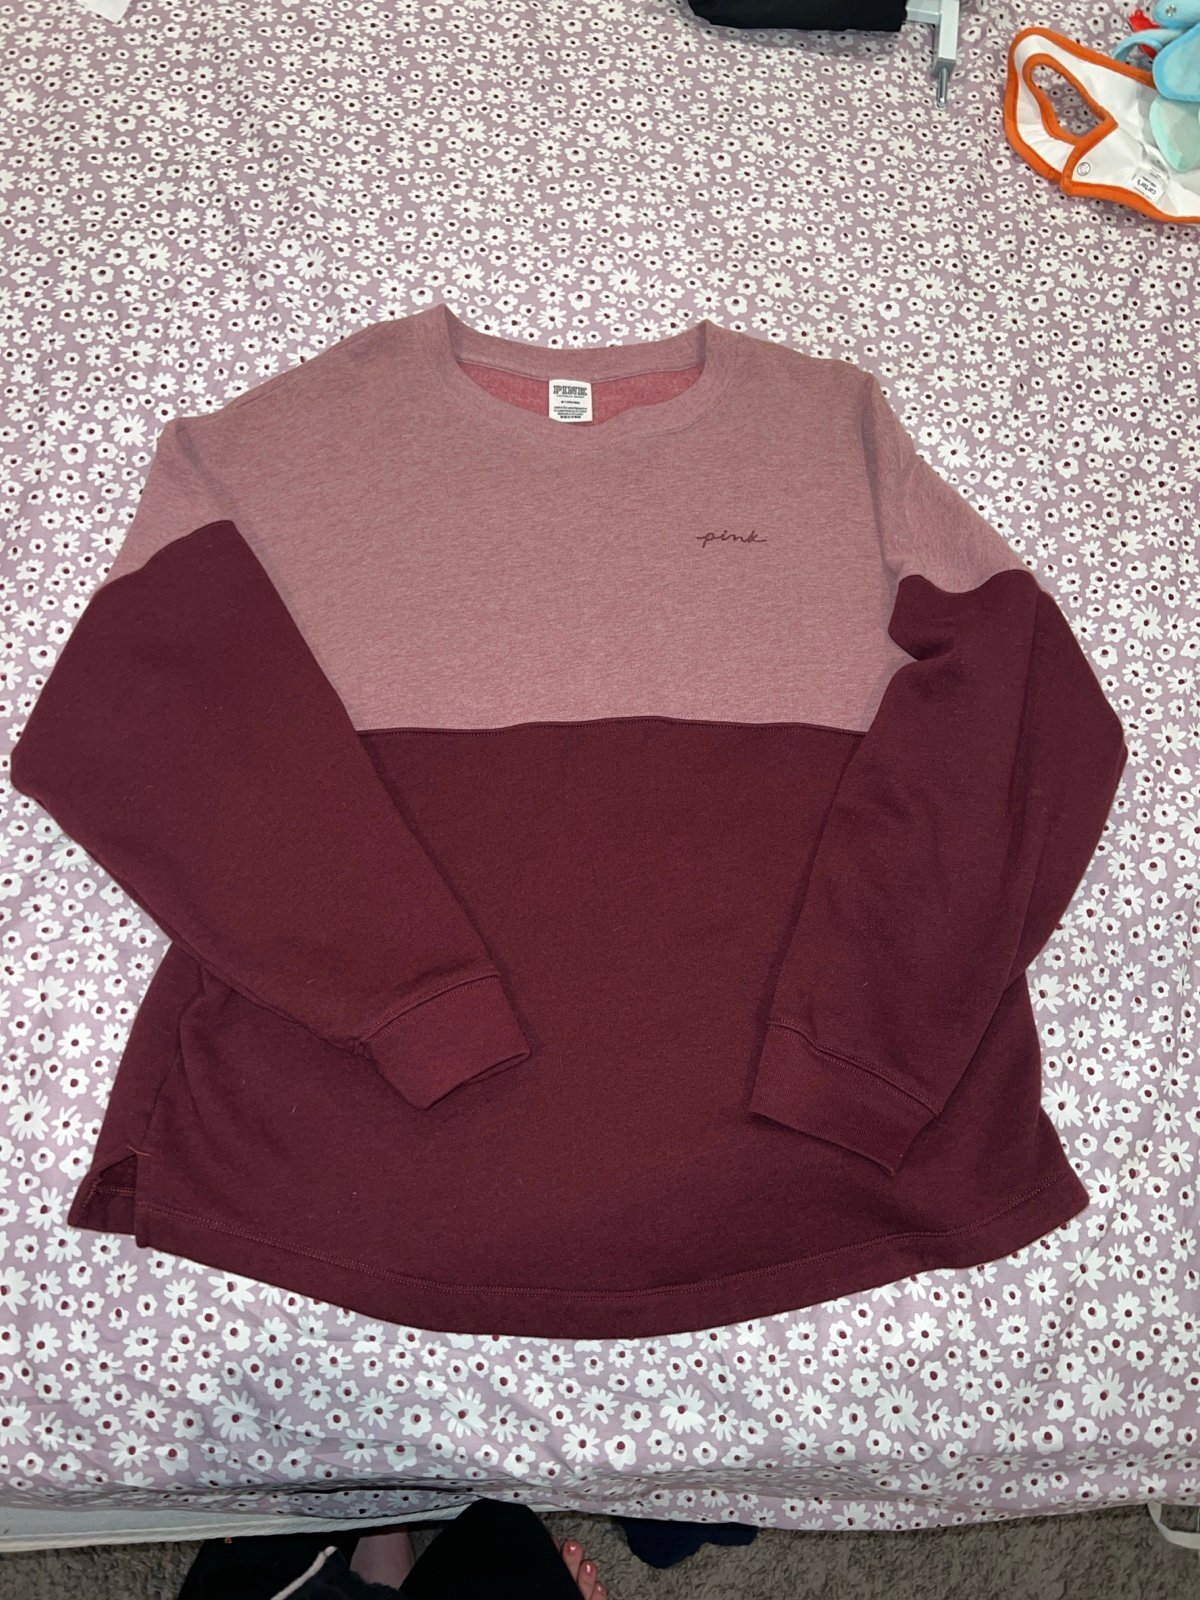 Popular PINK pullover sweater iQubIvVZK New Style